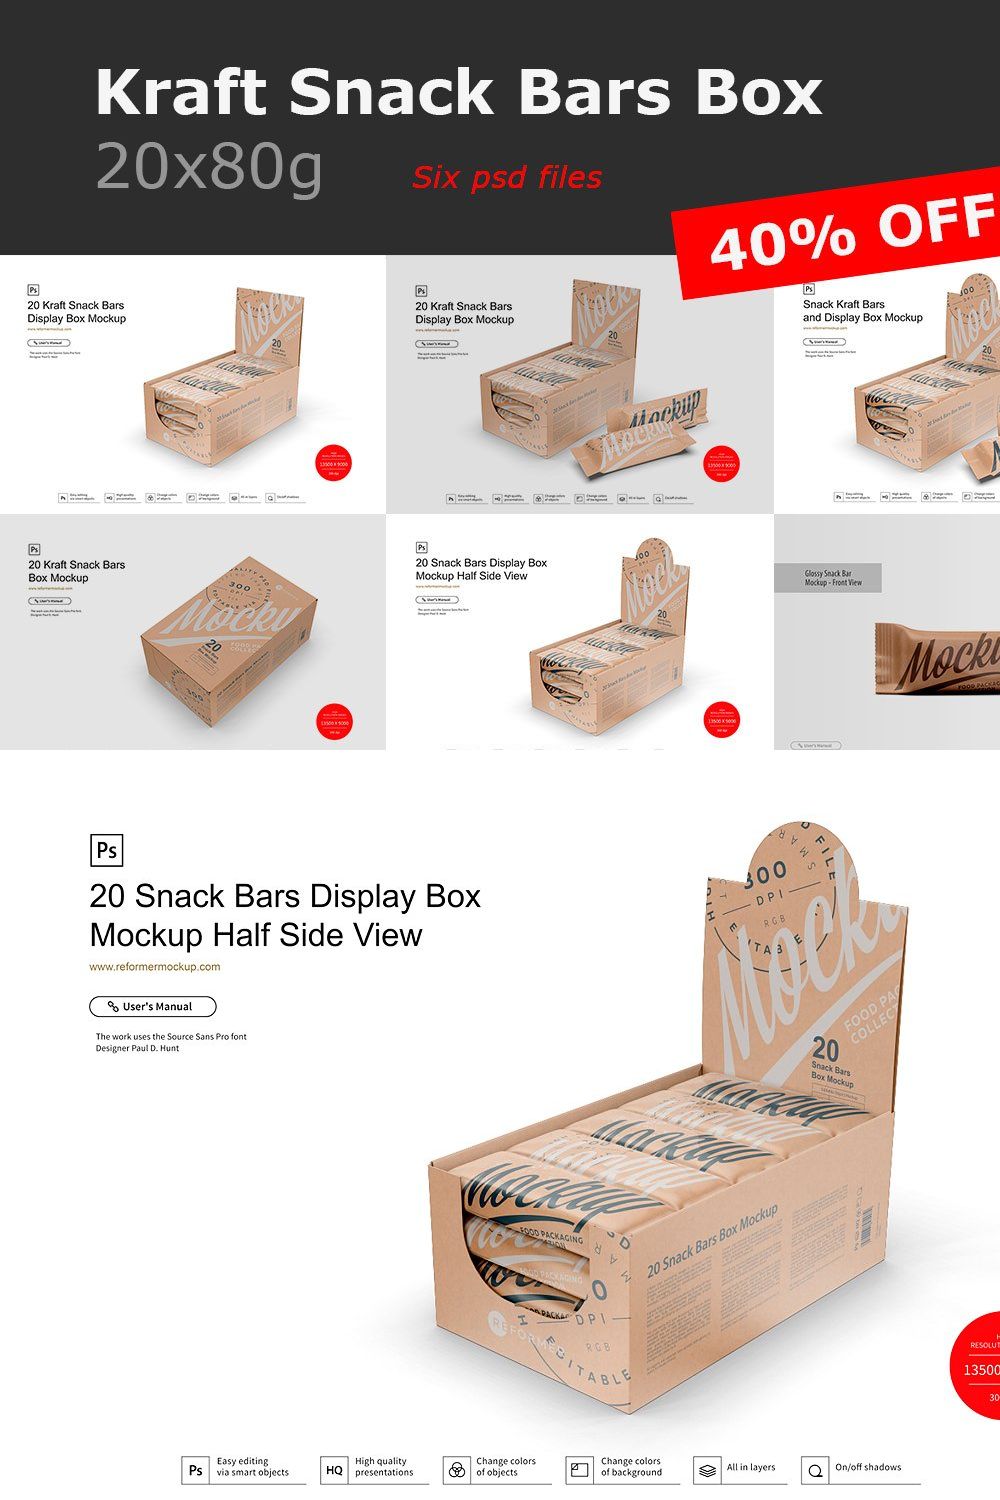 Snack Bars Box Mockup 20x80g pinterest preview image.